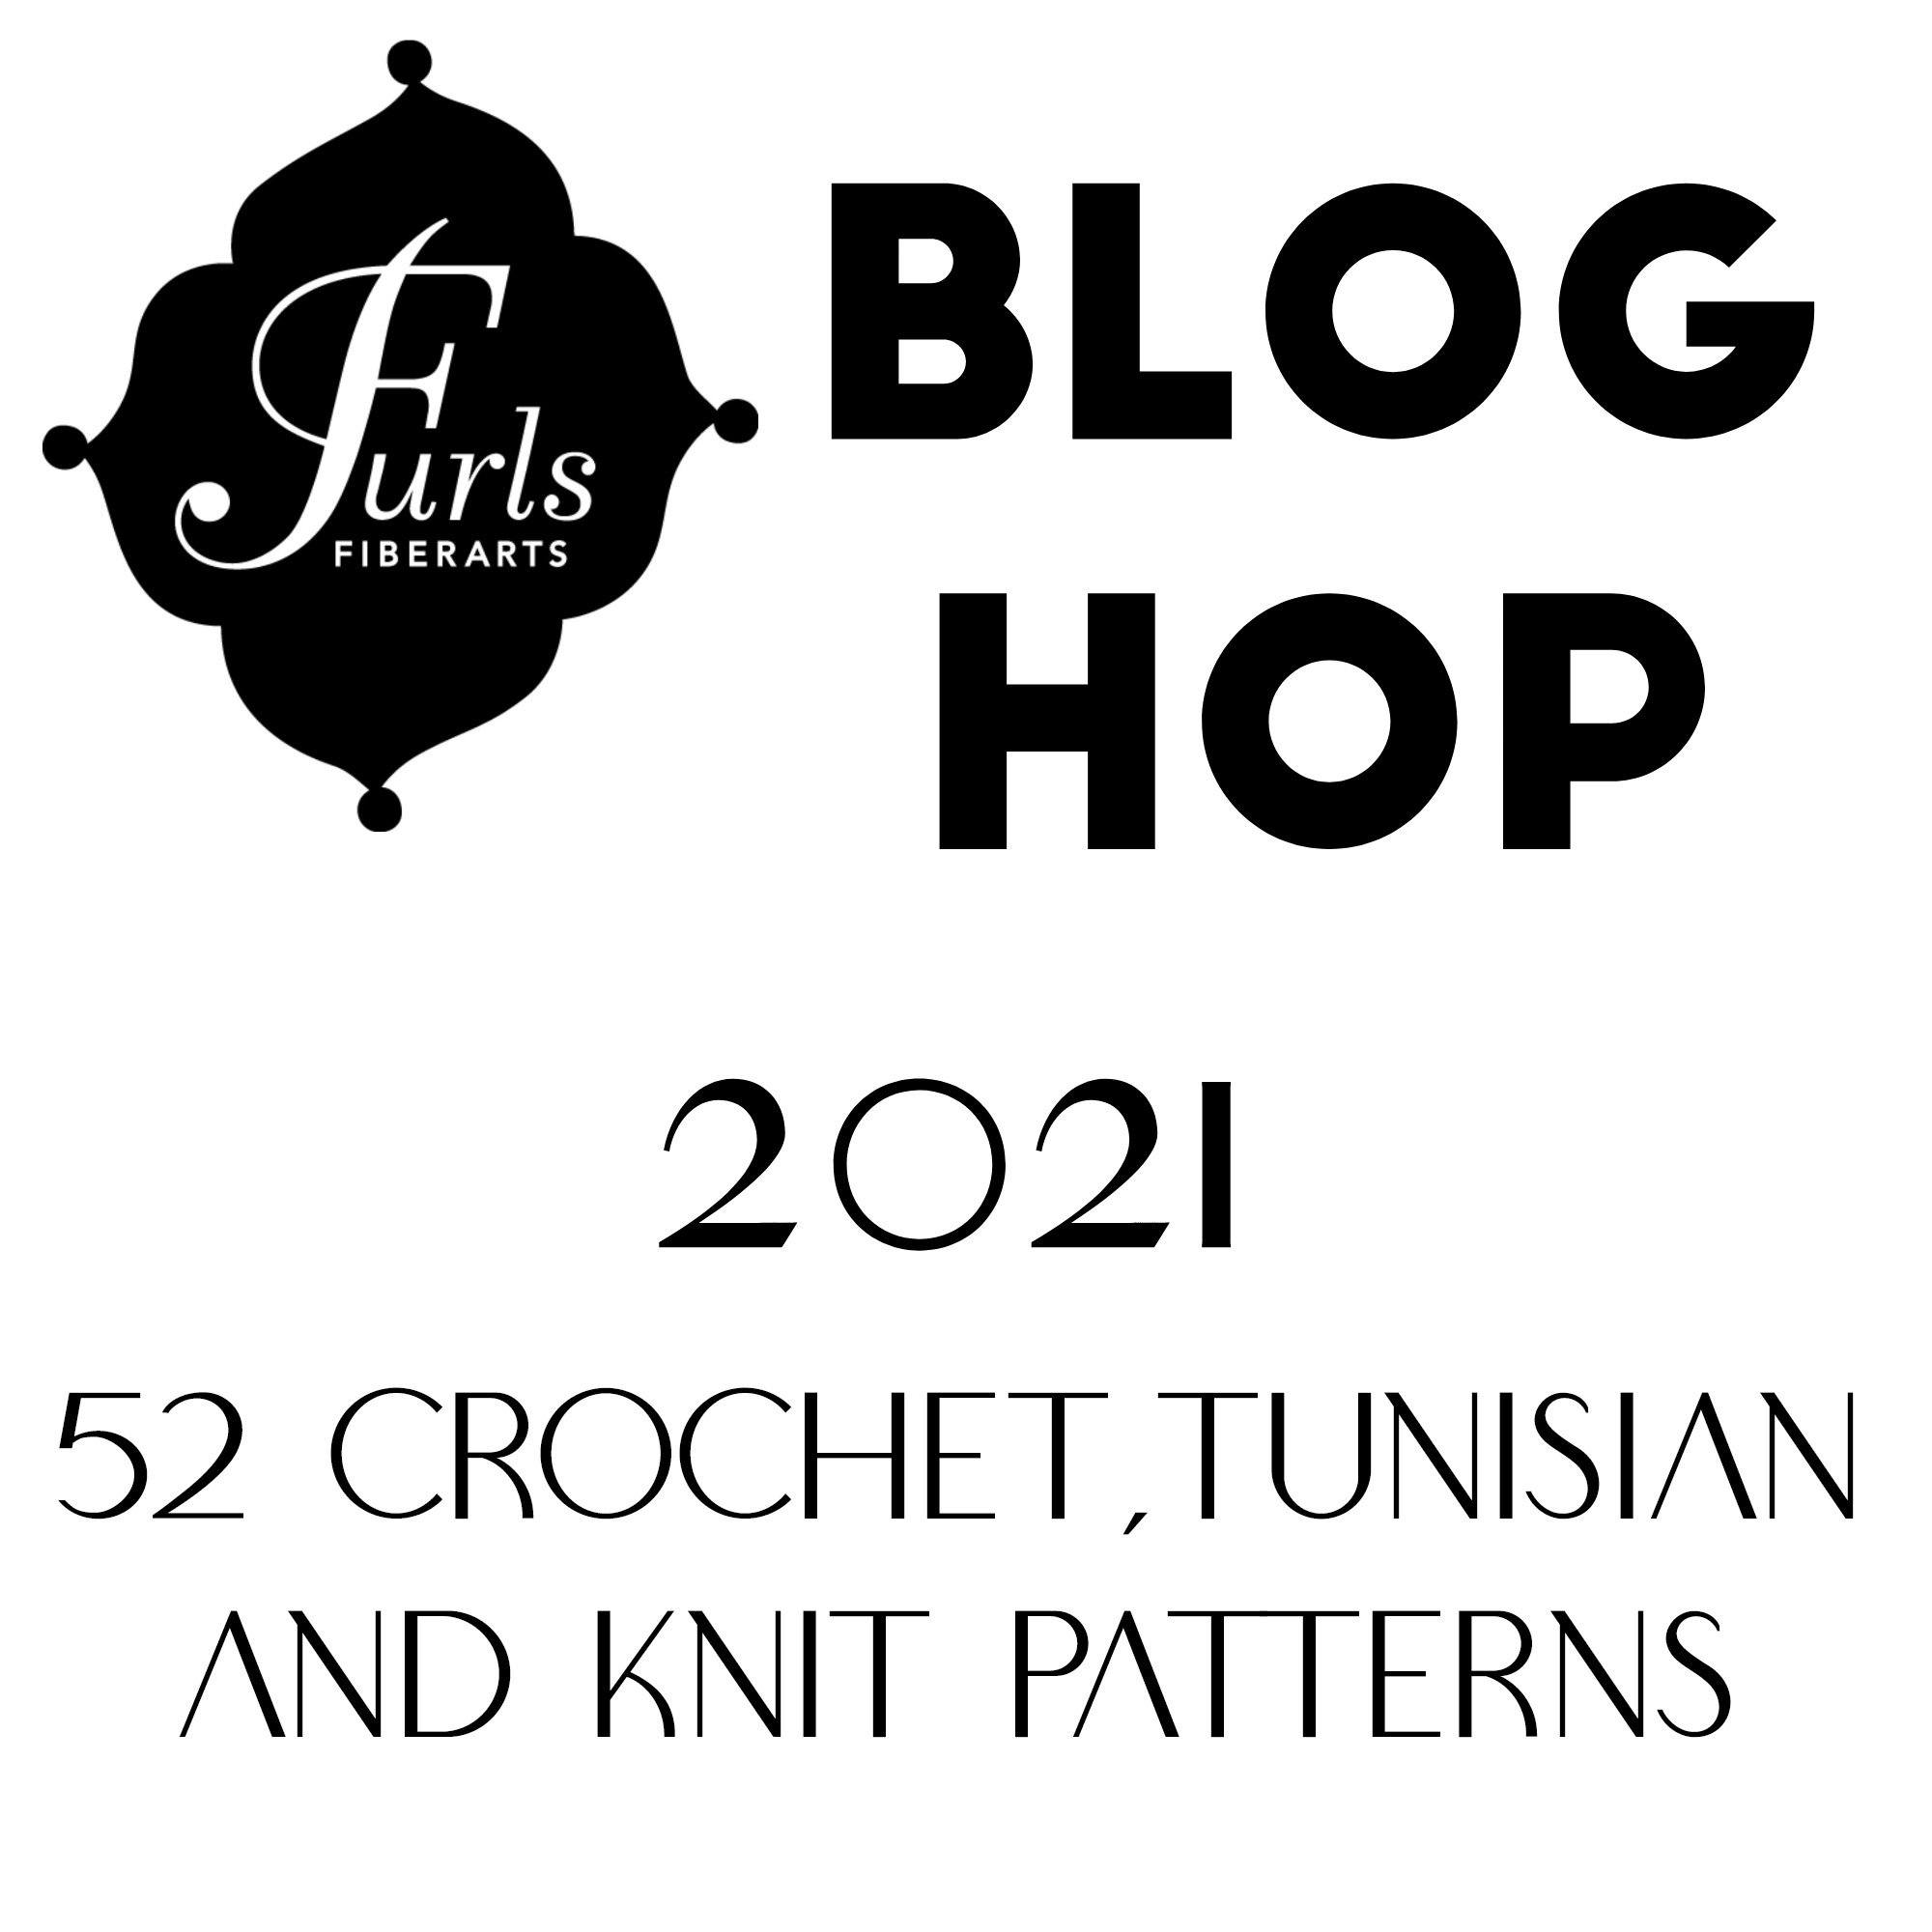 Furls Blog Hop 2021 - 52 FREE Crochet, Tunisian and Knit Patterns